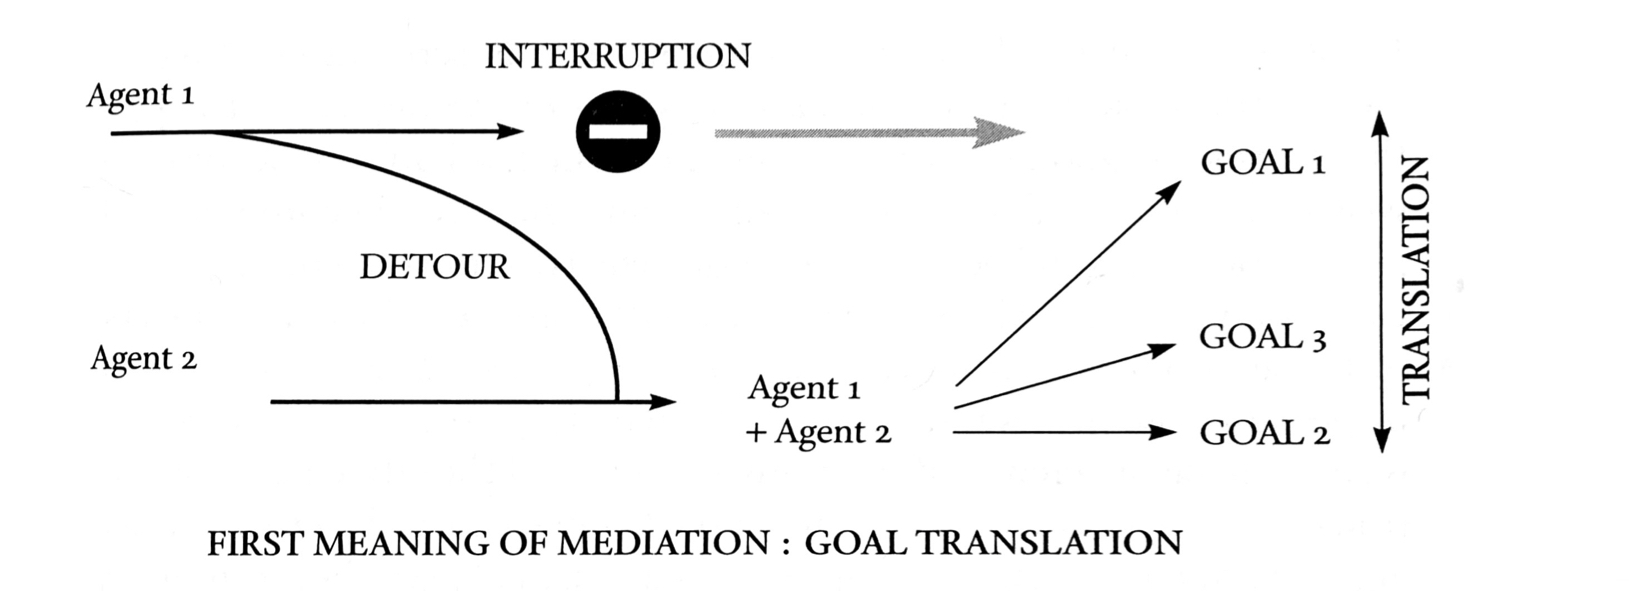 Latour's diagram illustrating translation